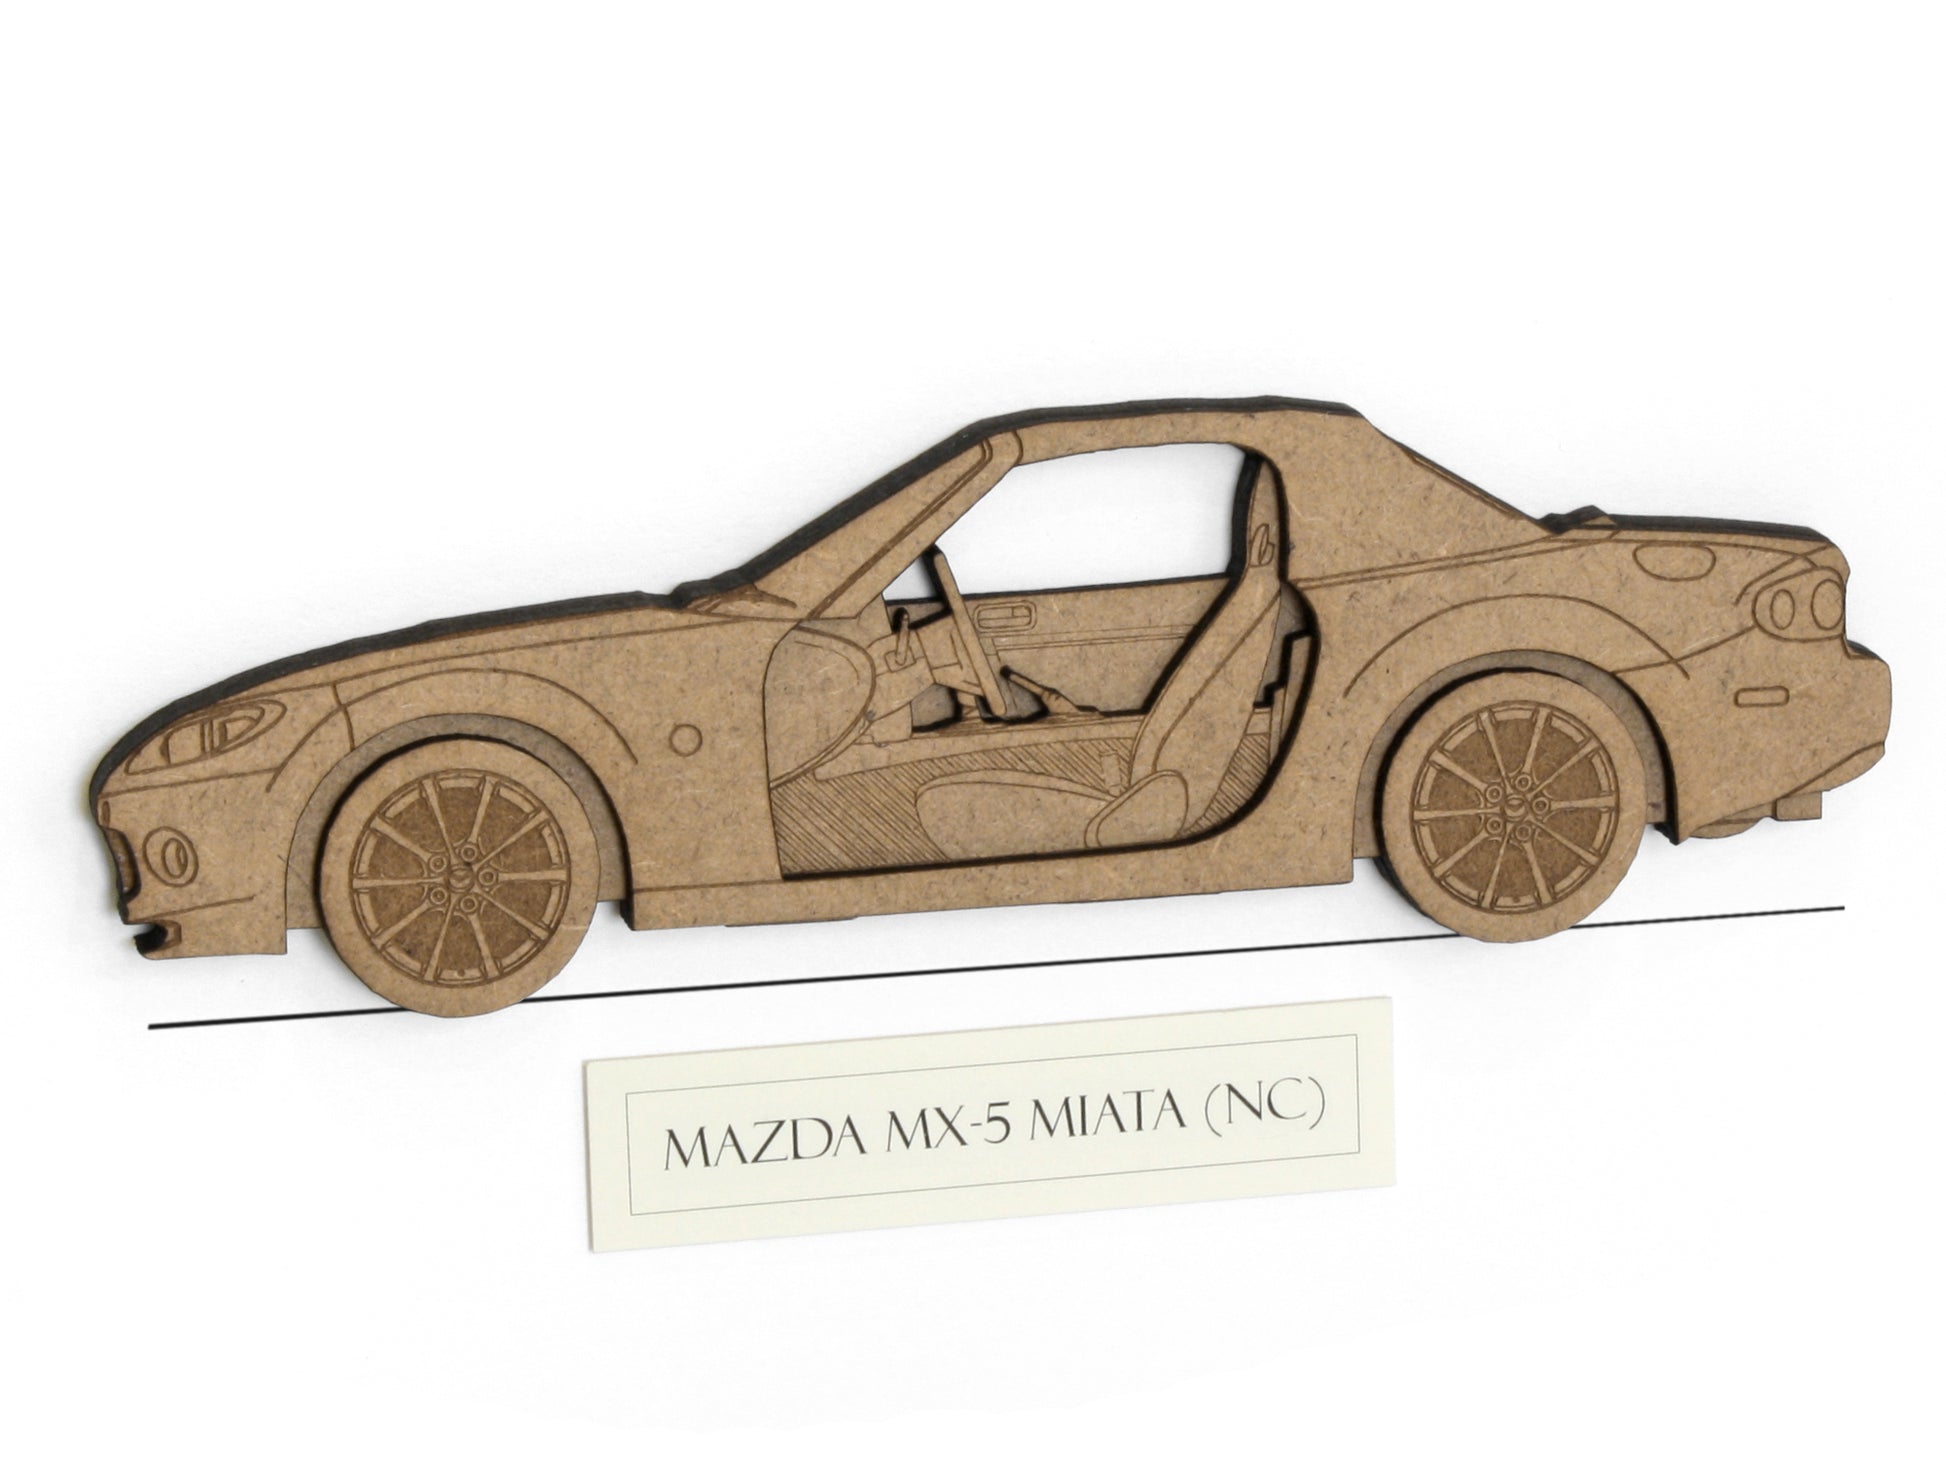 Mazda MX-5 Miata NC art